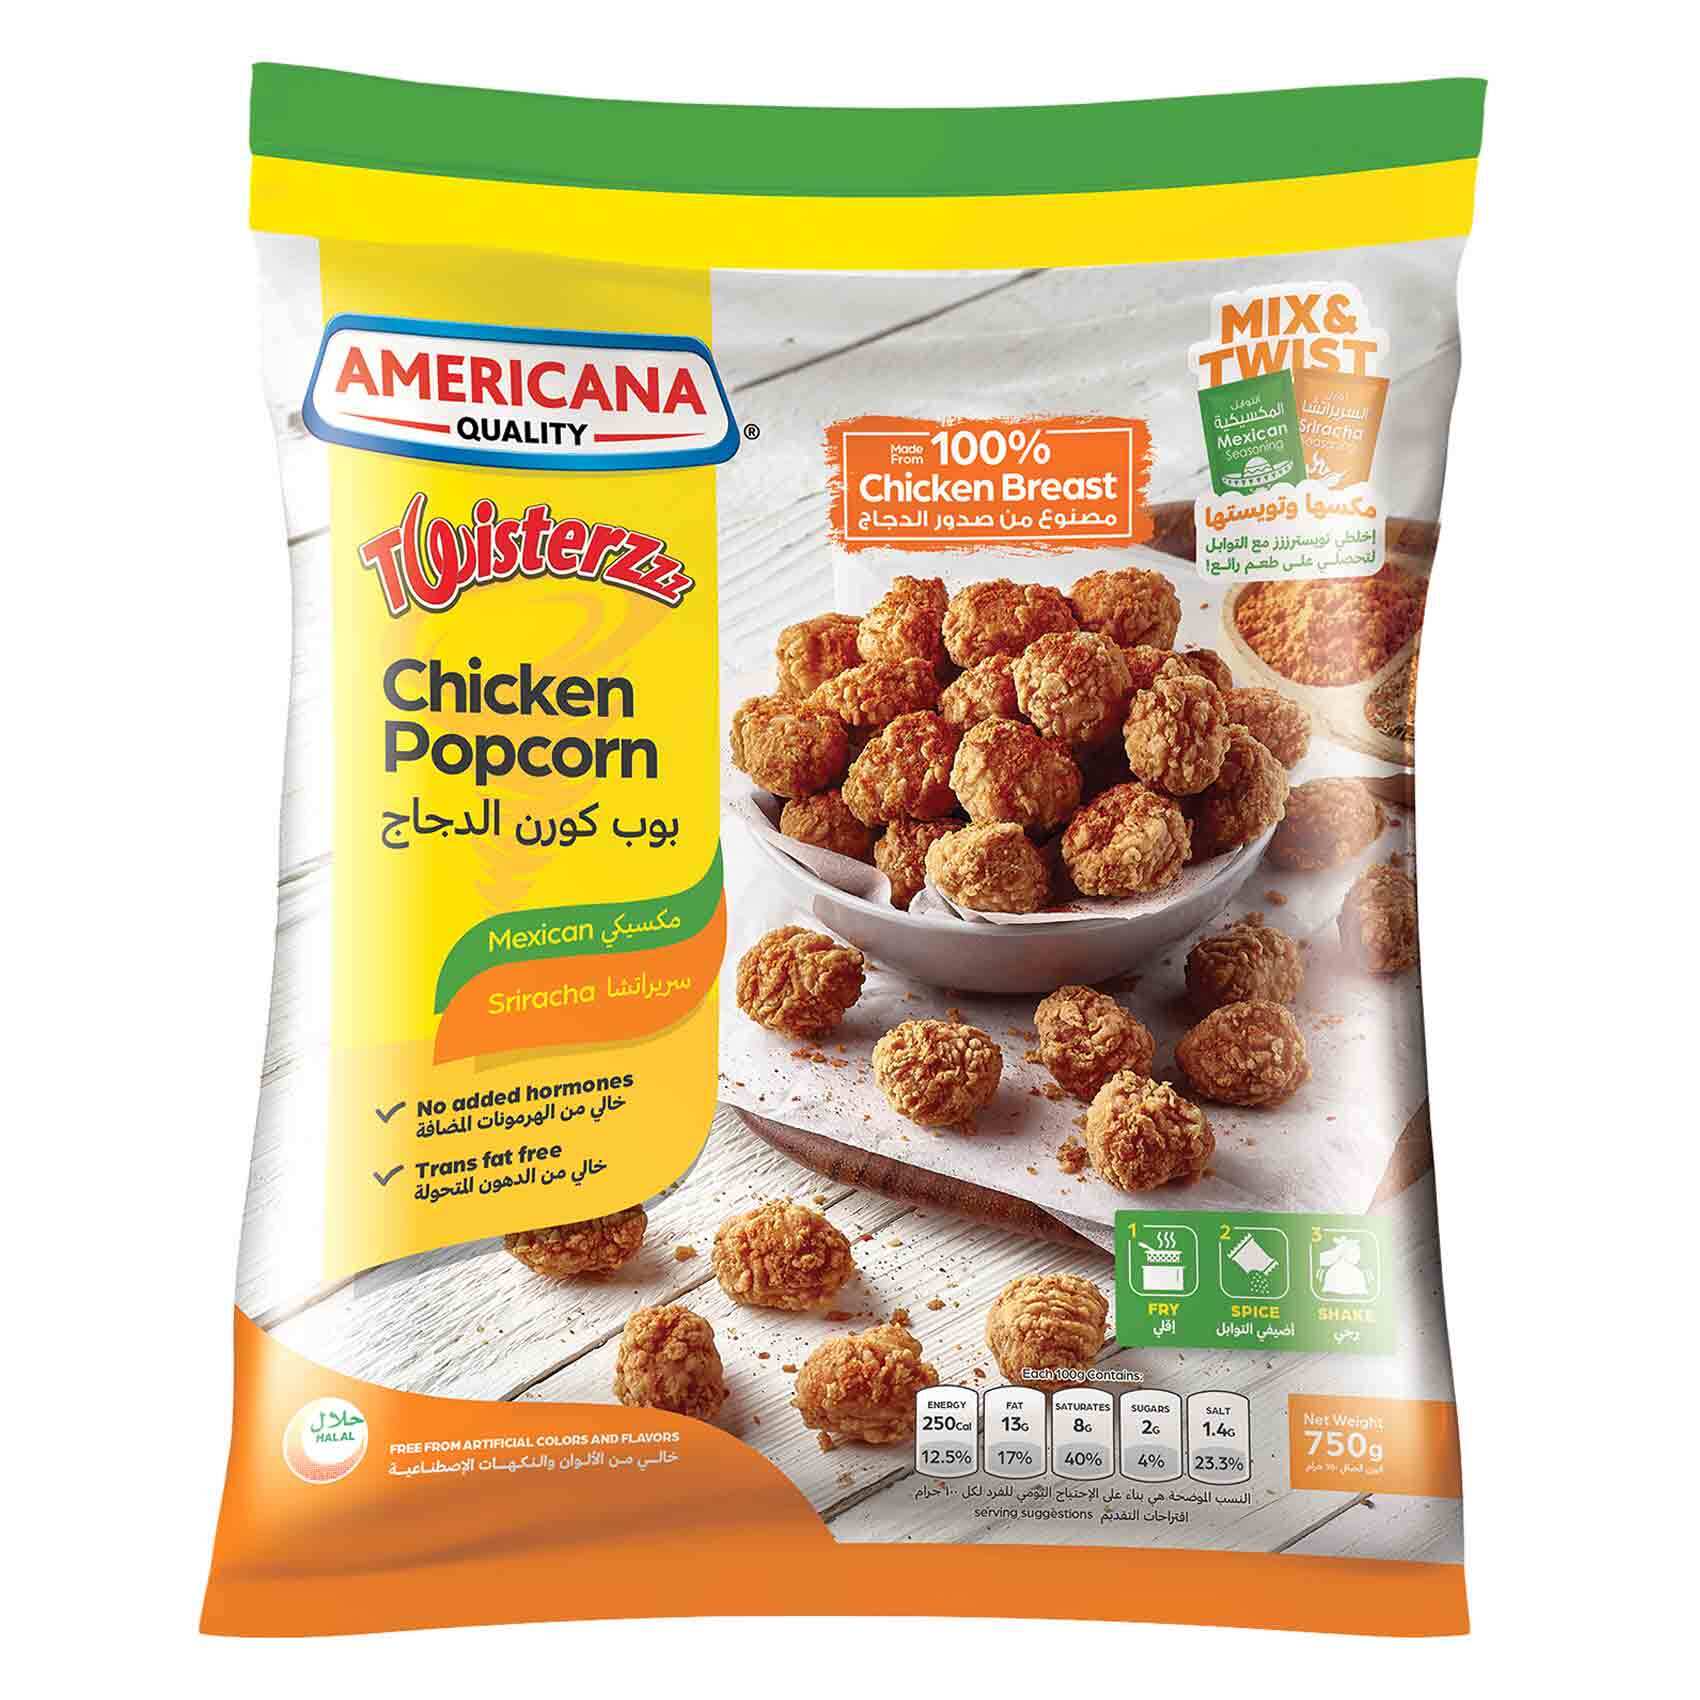 Americana Chicken Fillet 750g - Americana Foods